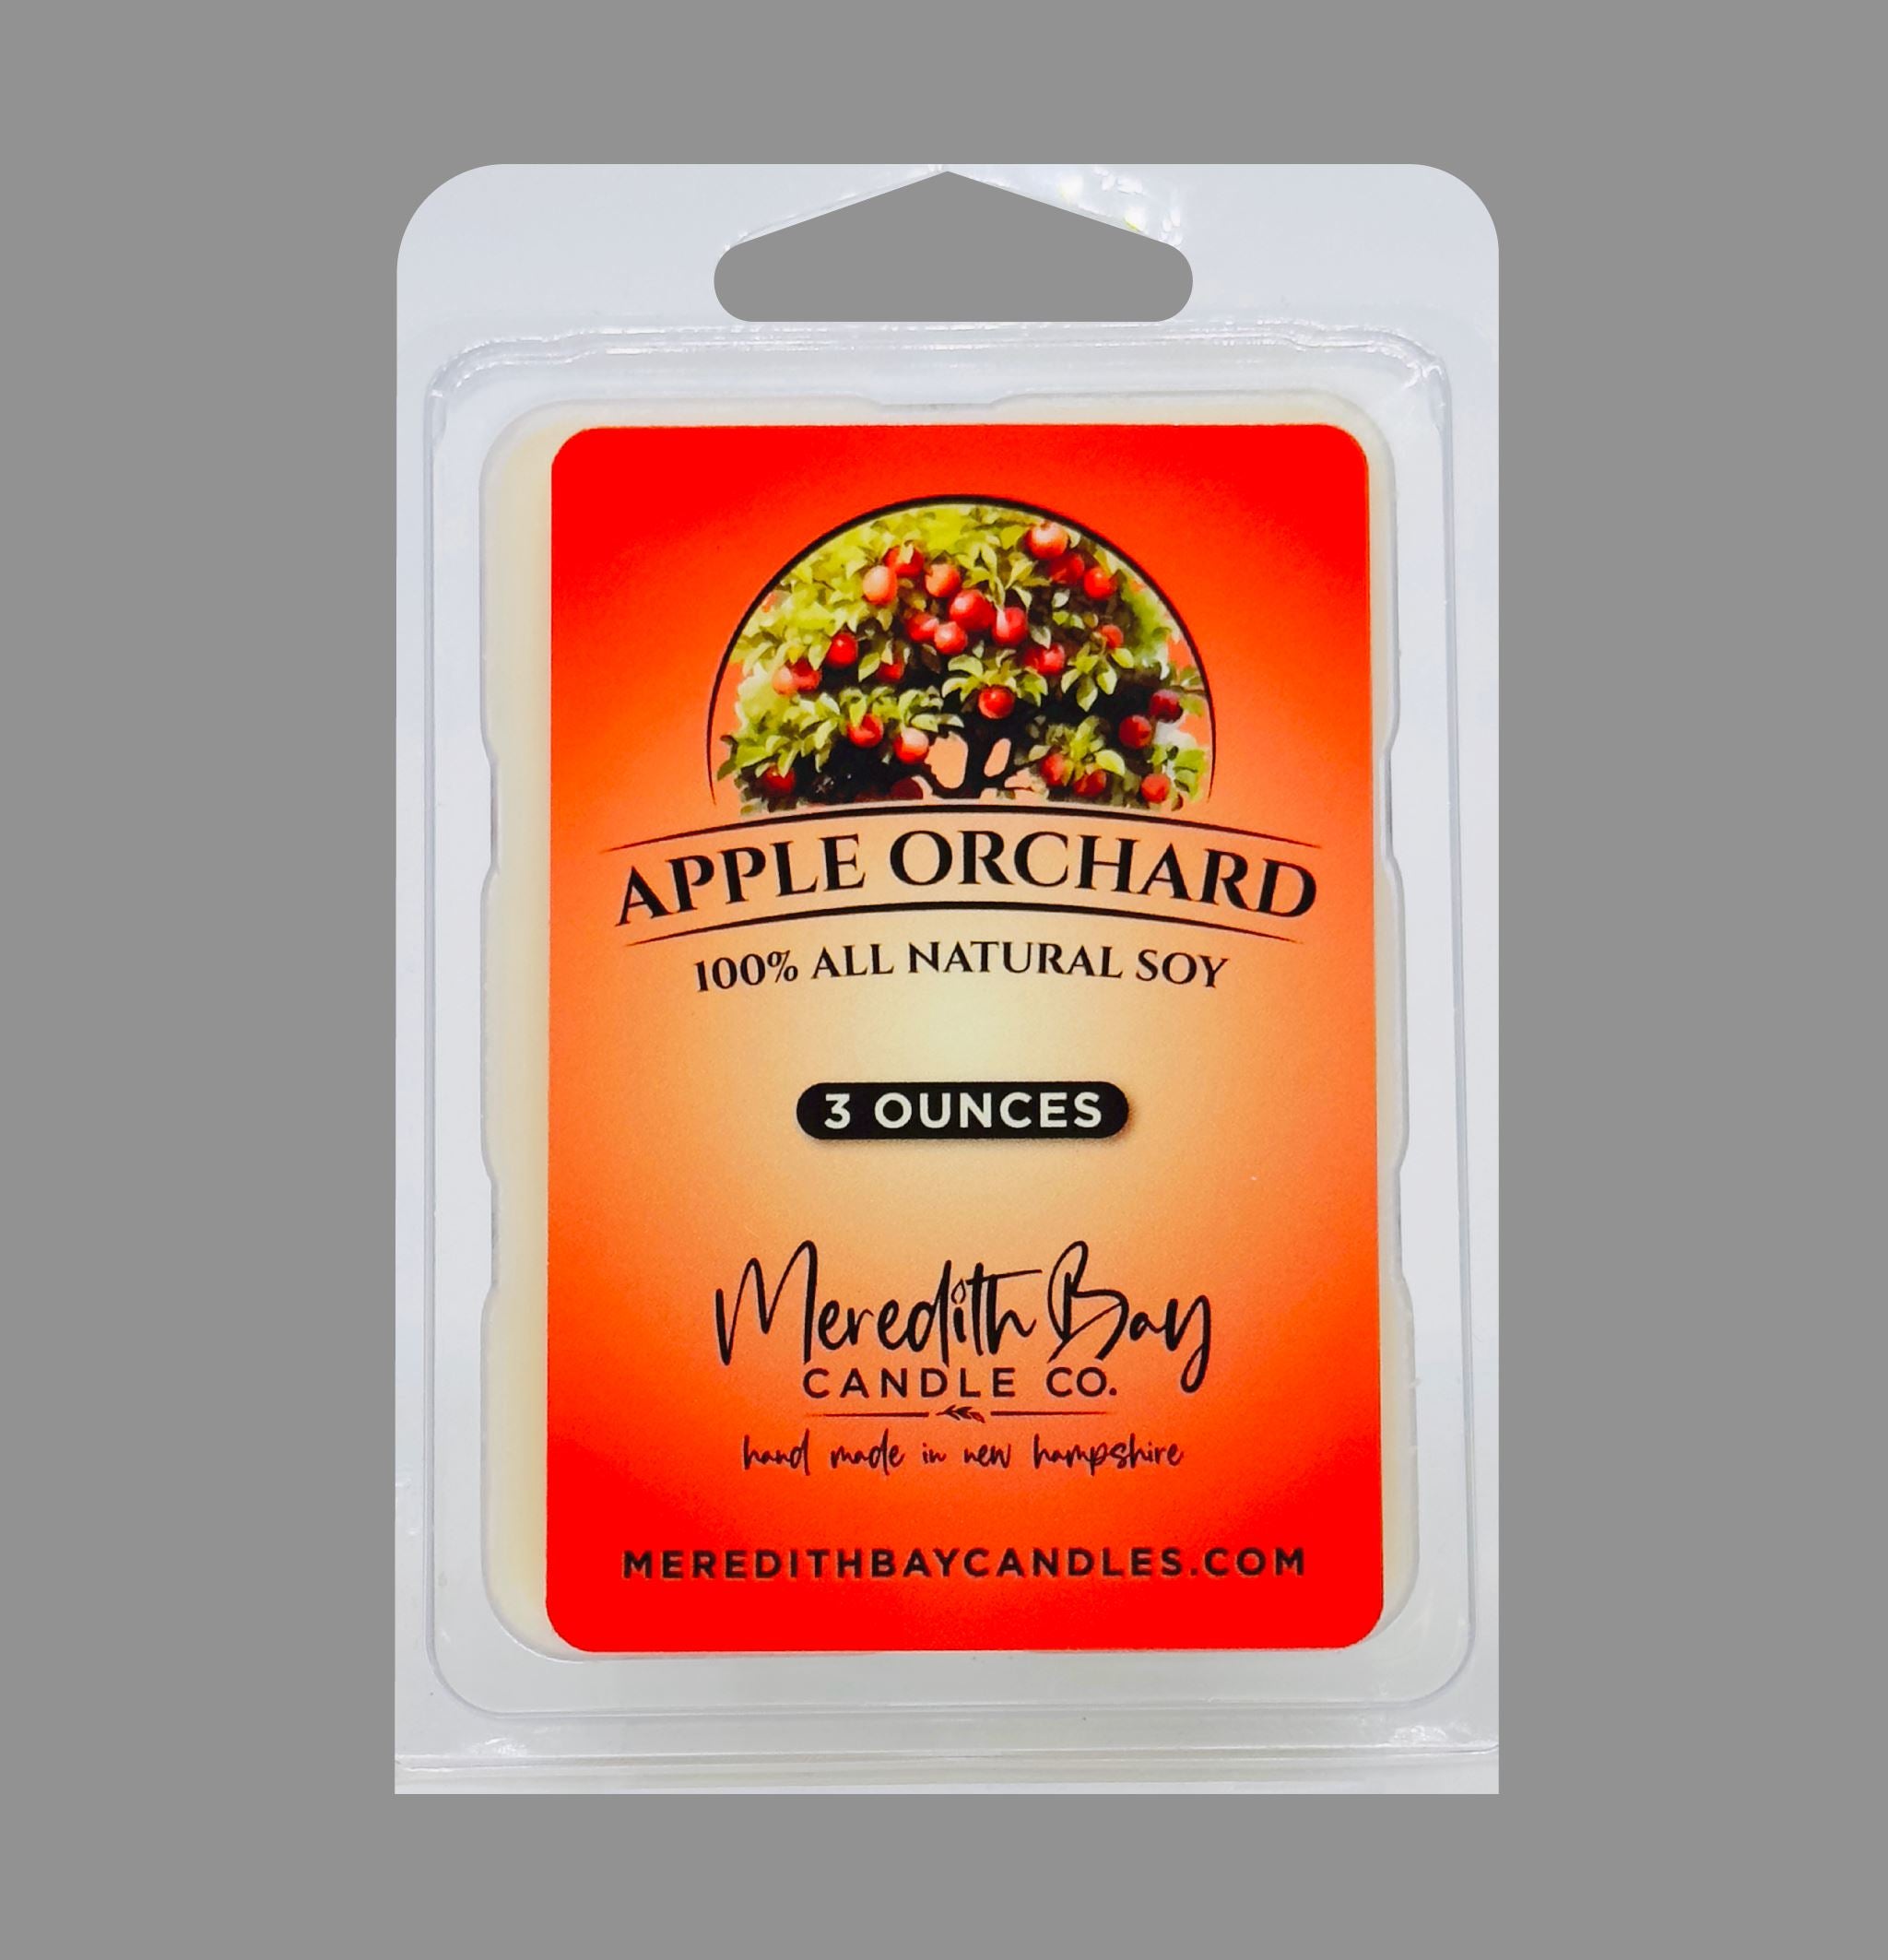 Apple Orchard Wax Melt Wax Melt Meredith Bay Candle Co 